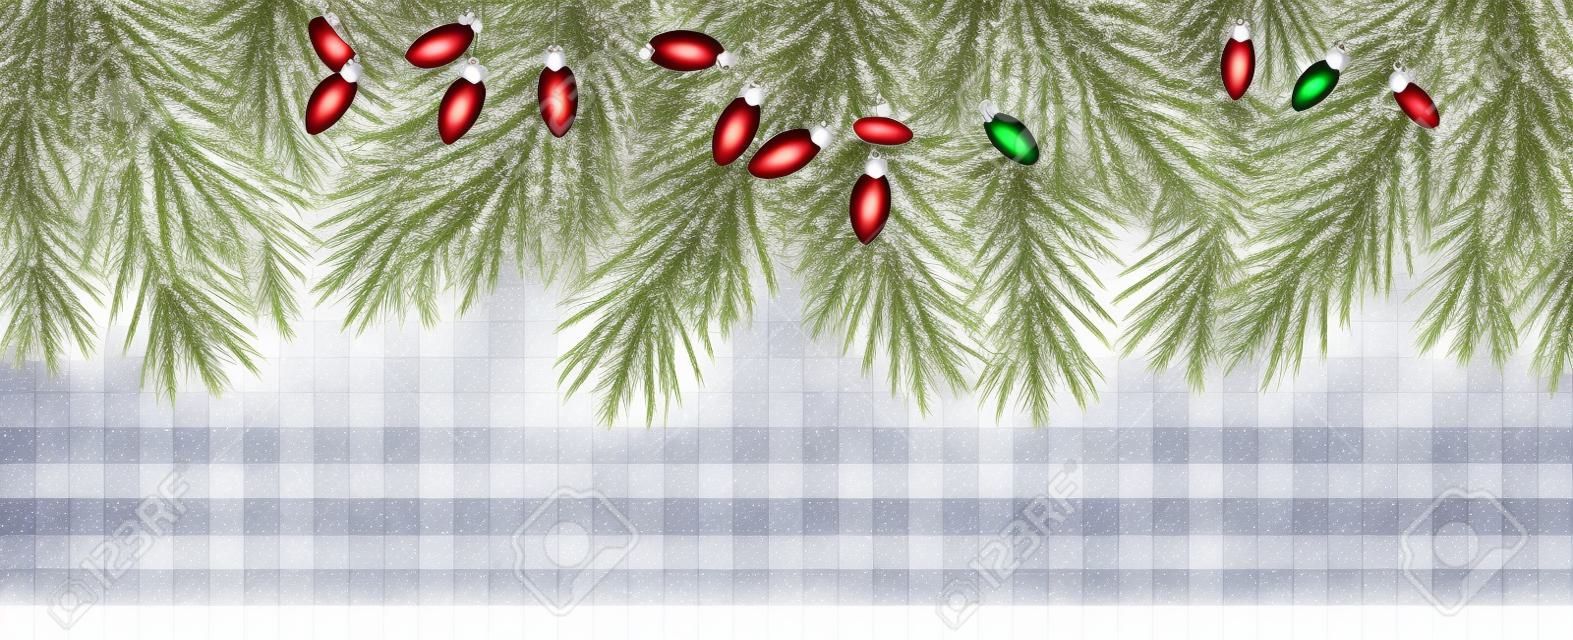 Kerstgrens met dennentakken en dennenappels op transparante achtergrond